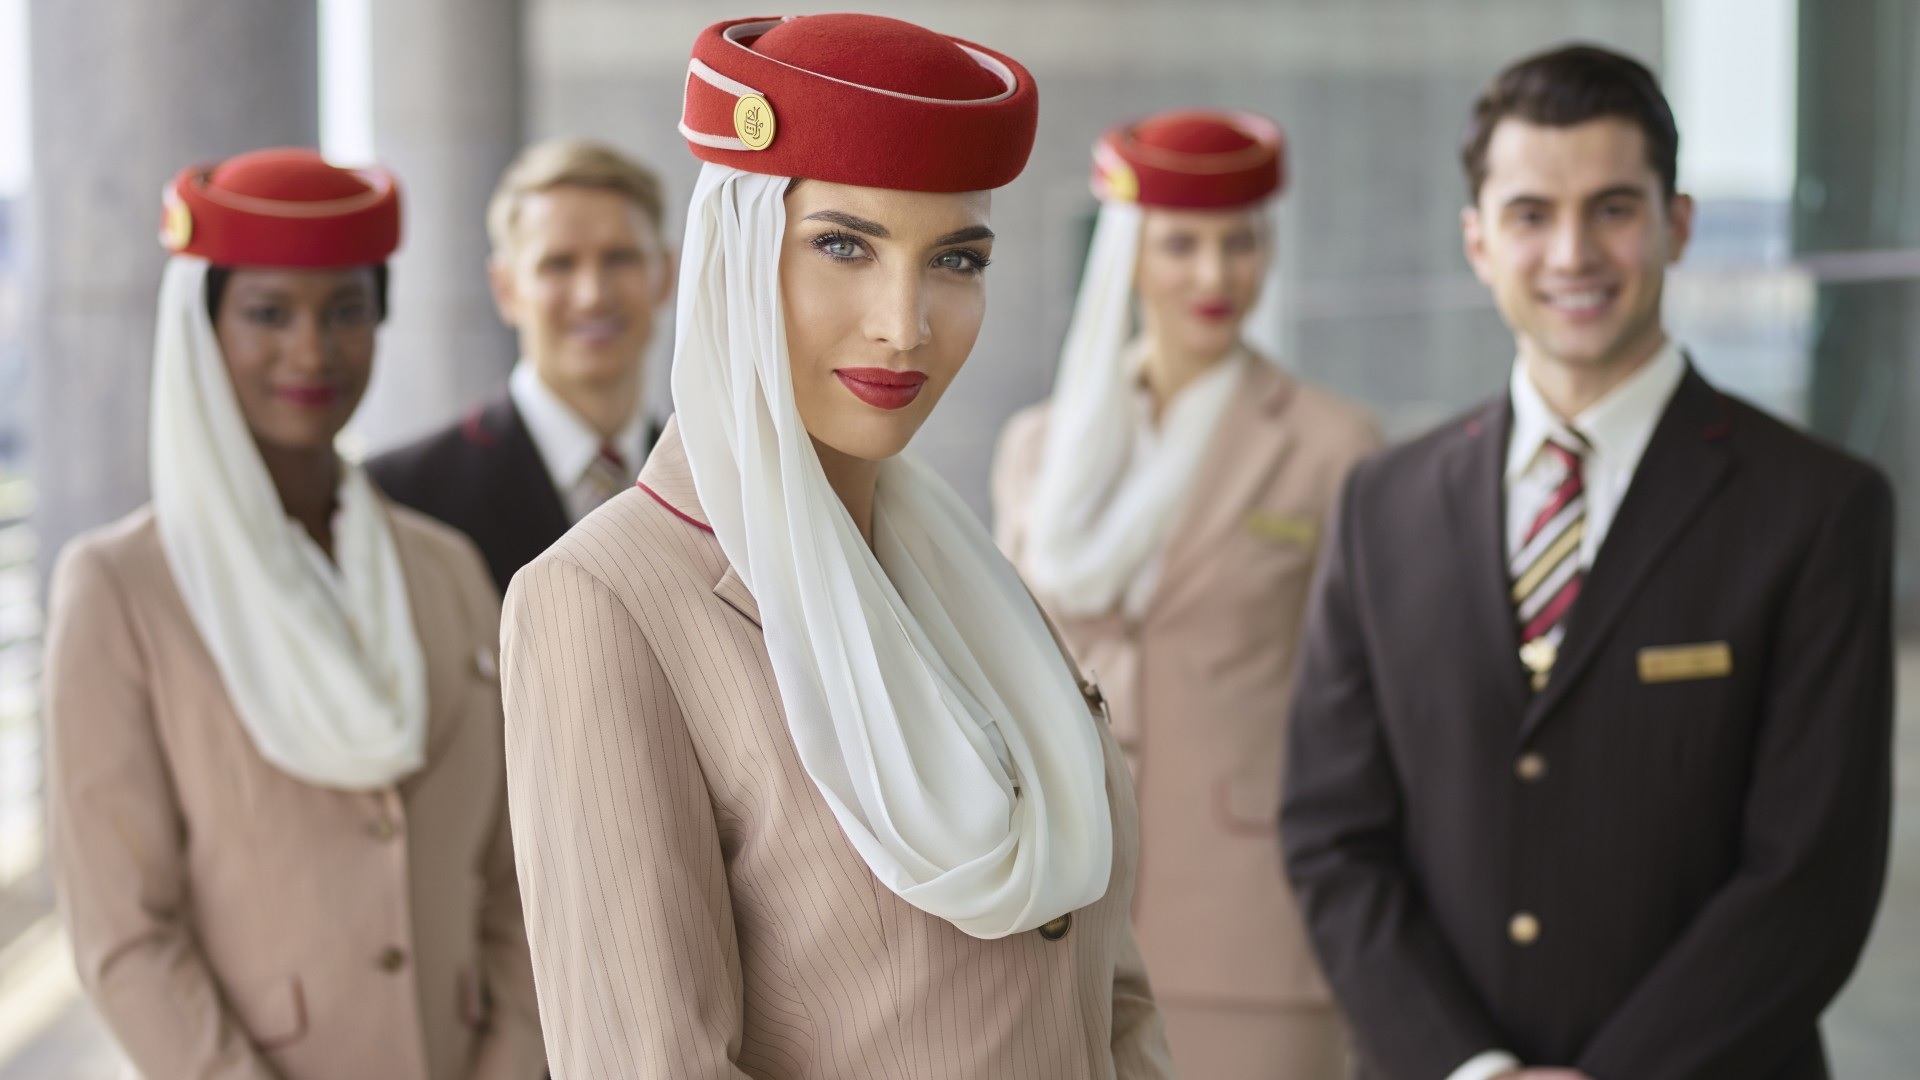 NOW HIRING: Emirates seeking over 3,500 employees worldwide - The Filipino Times